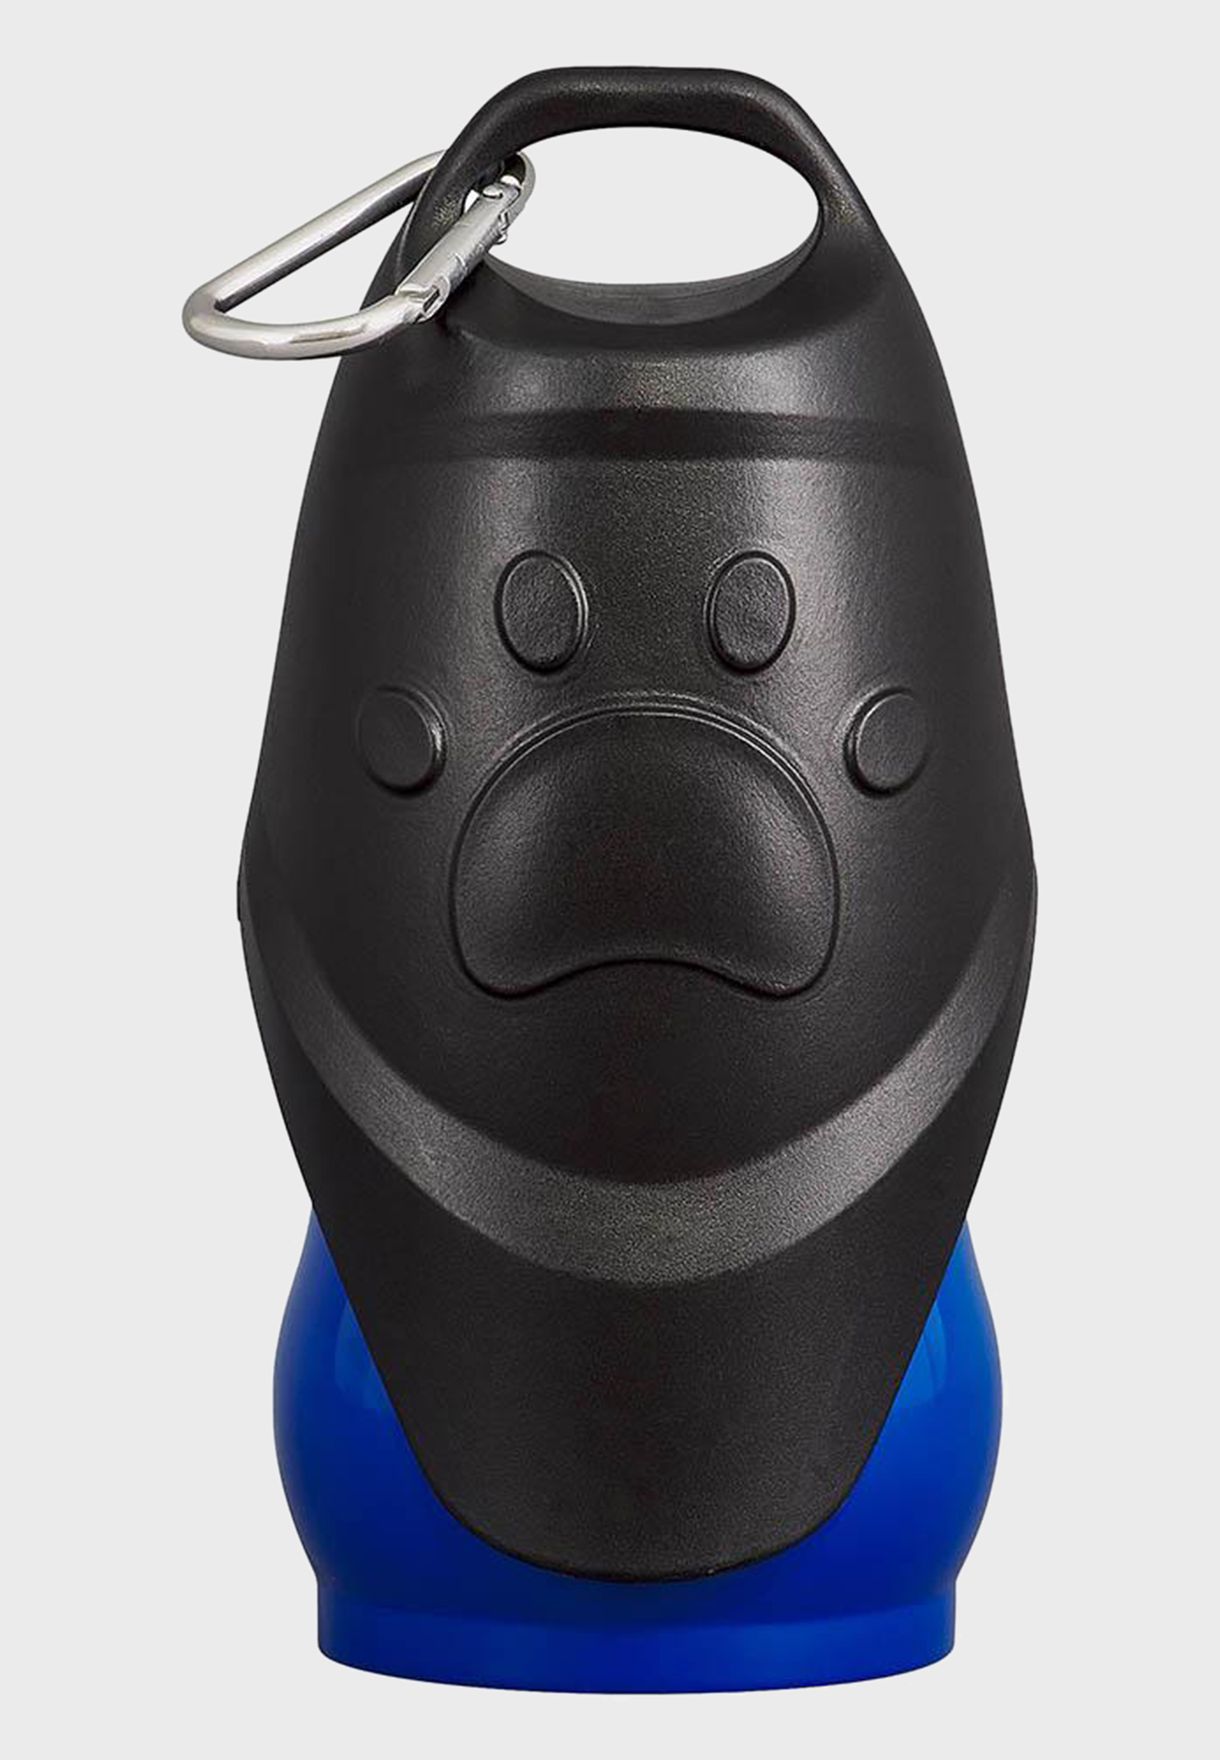 Lap it Up 2-in-1 Pet Travel Water Bottle & Bowl